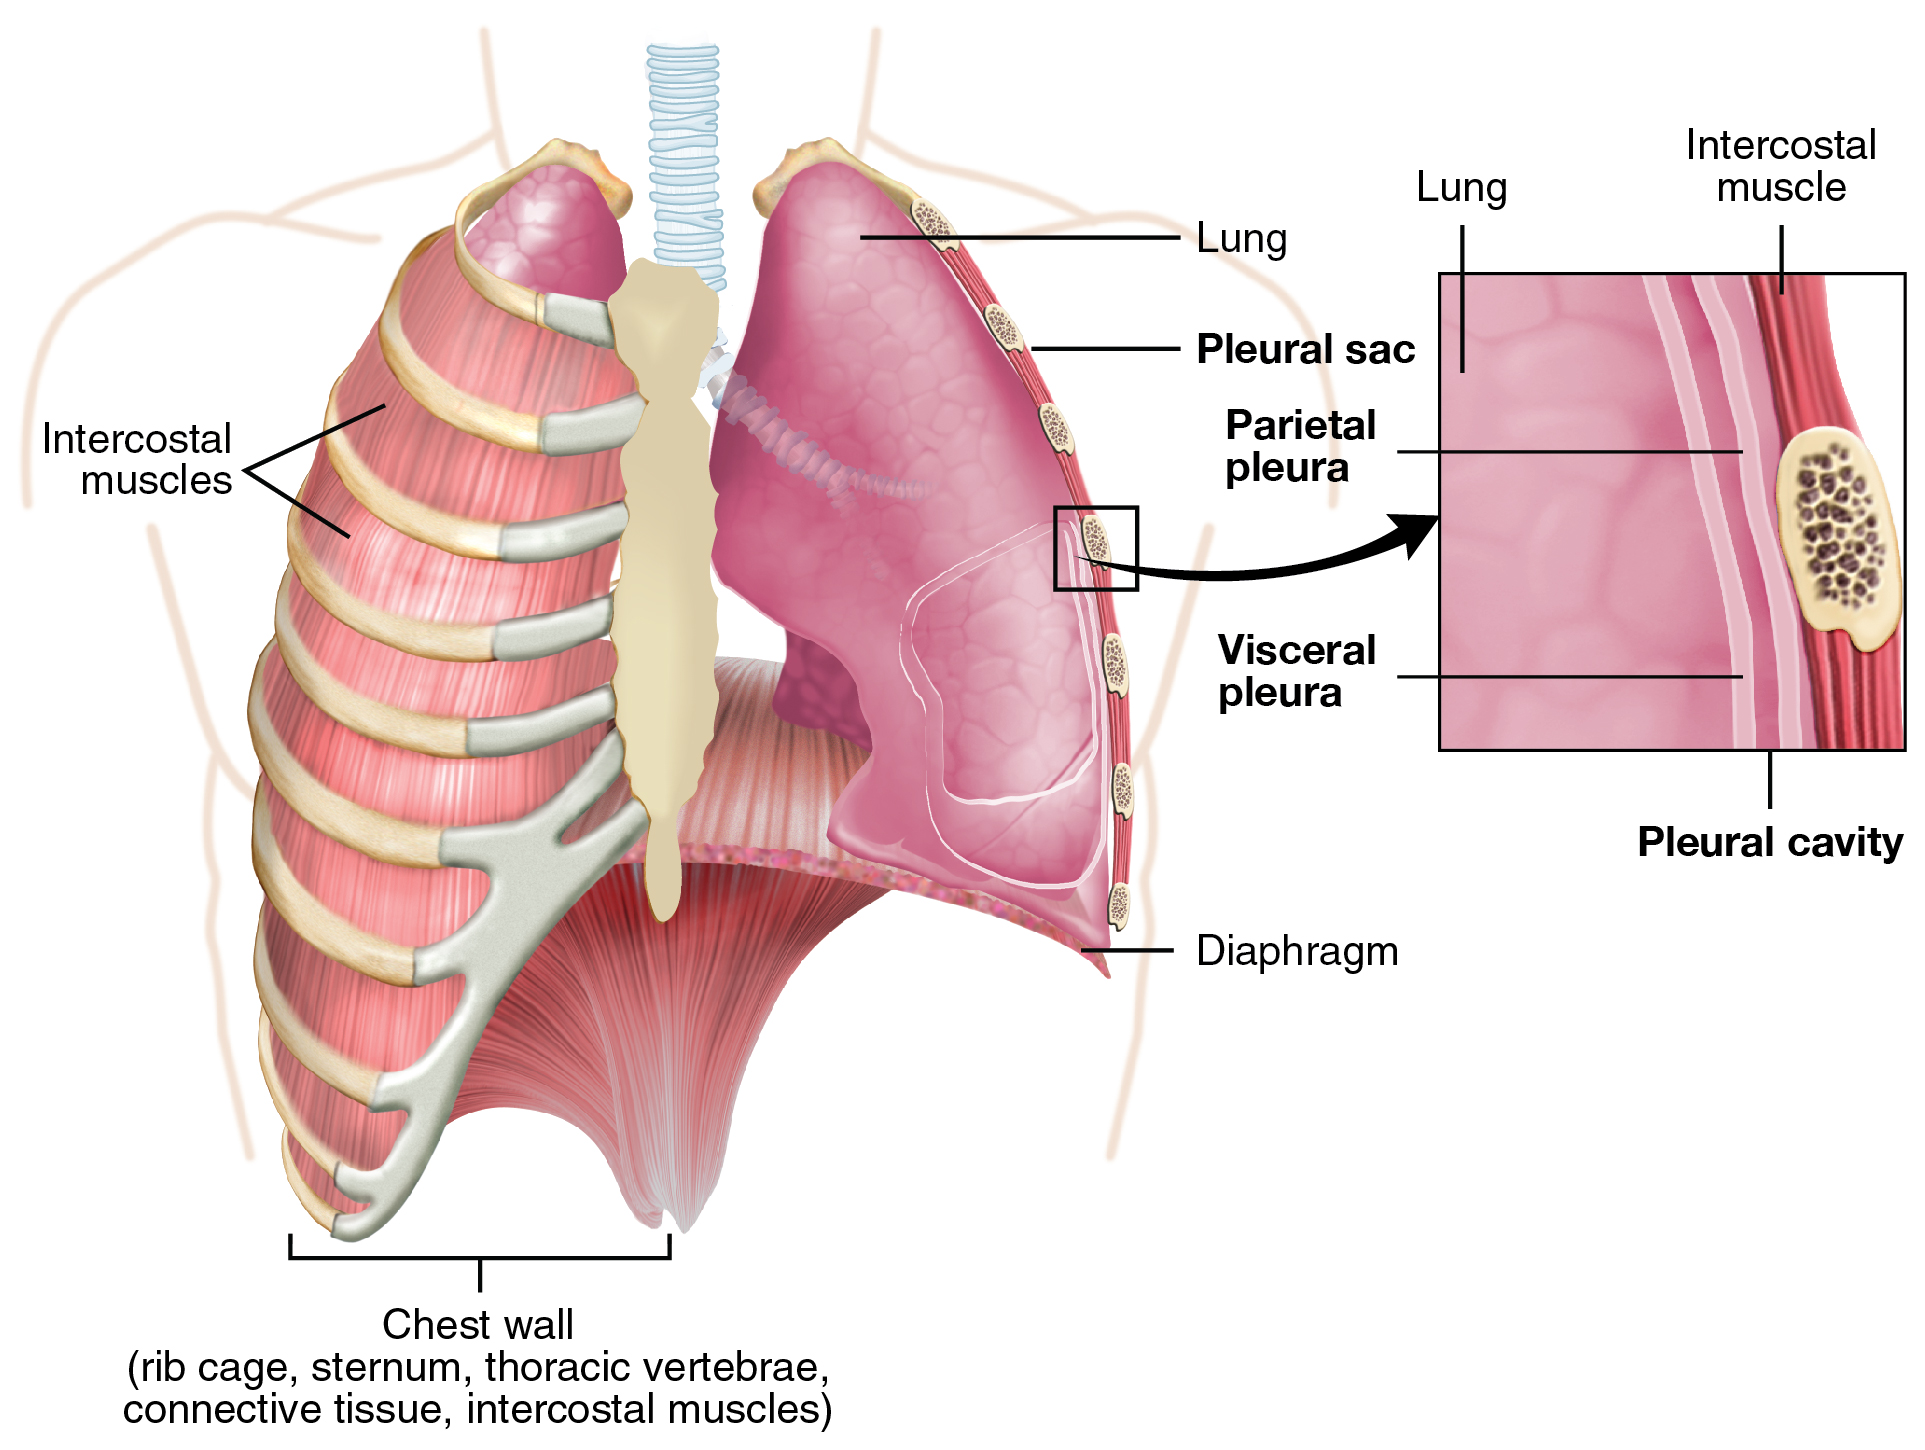 Parietal and visceral pleurae of the lungs. Image description available.